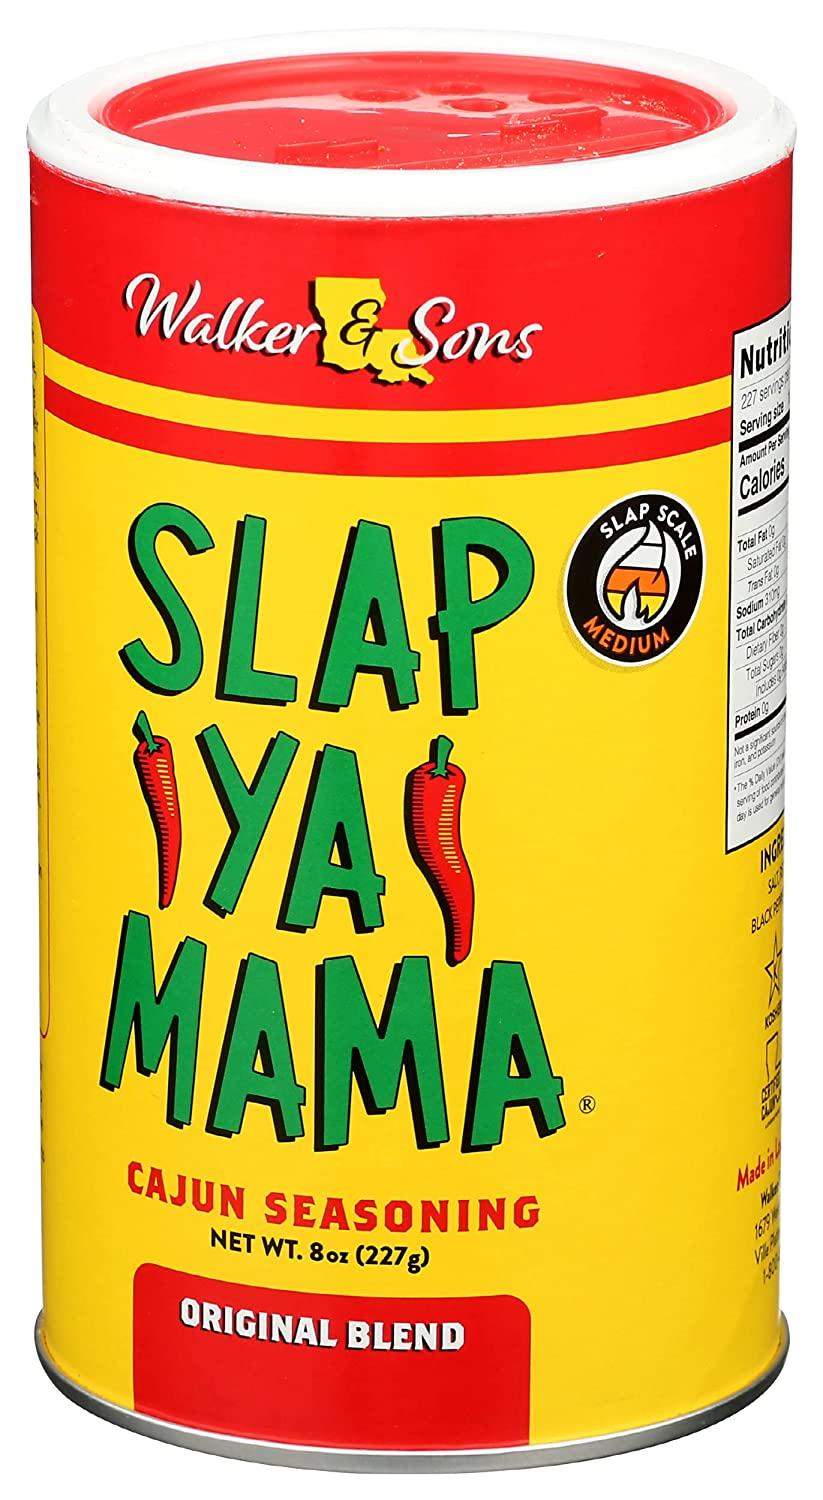  Slap Ya Mama Cajun Seasoning from Louisiana, Hot Blend, No MSG  and Kosher, 8 Ounce Can : Grocery & Gourmet Food